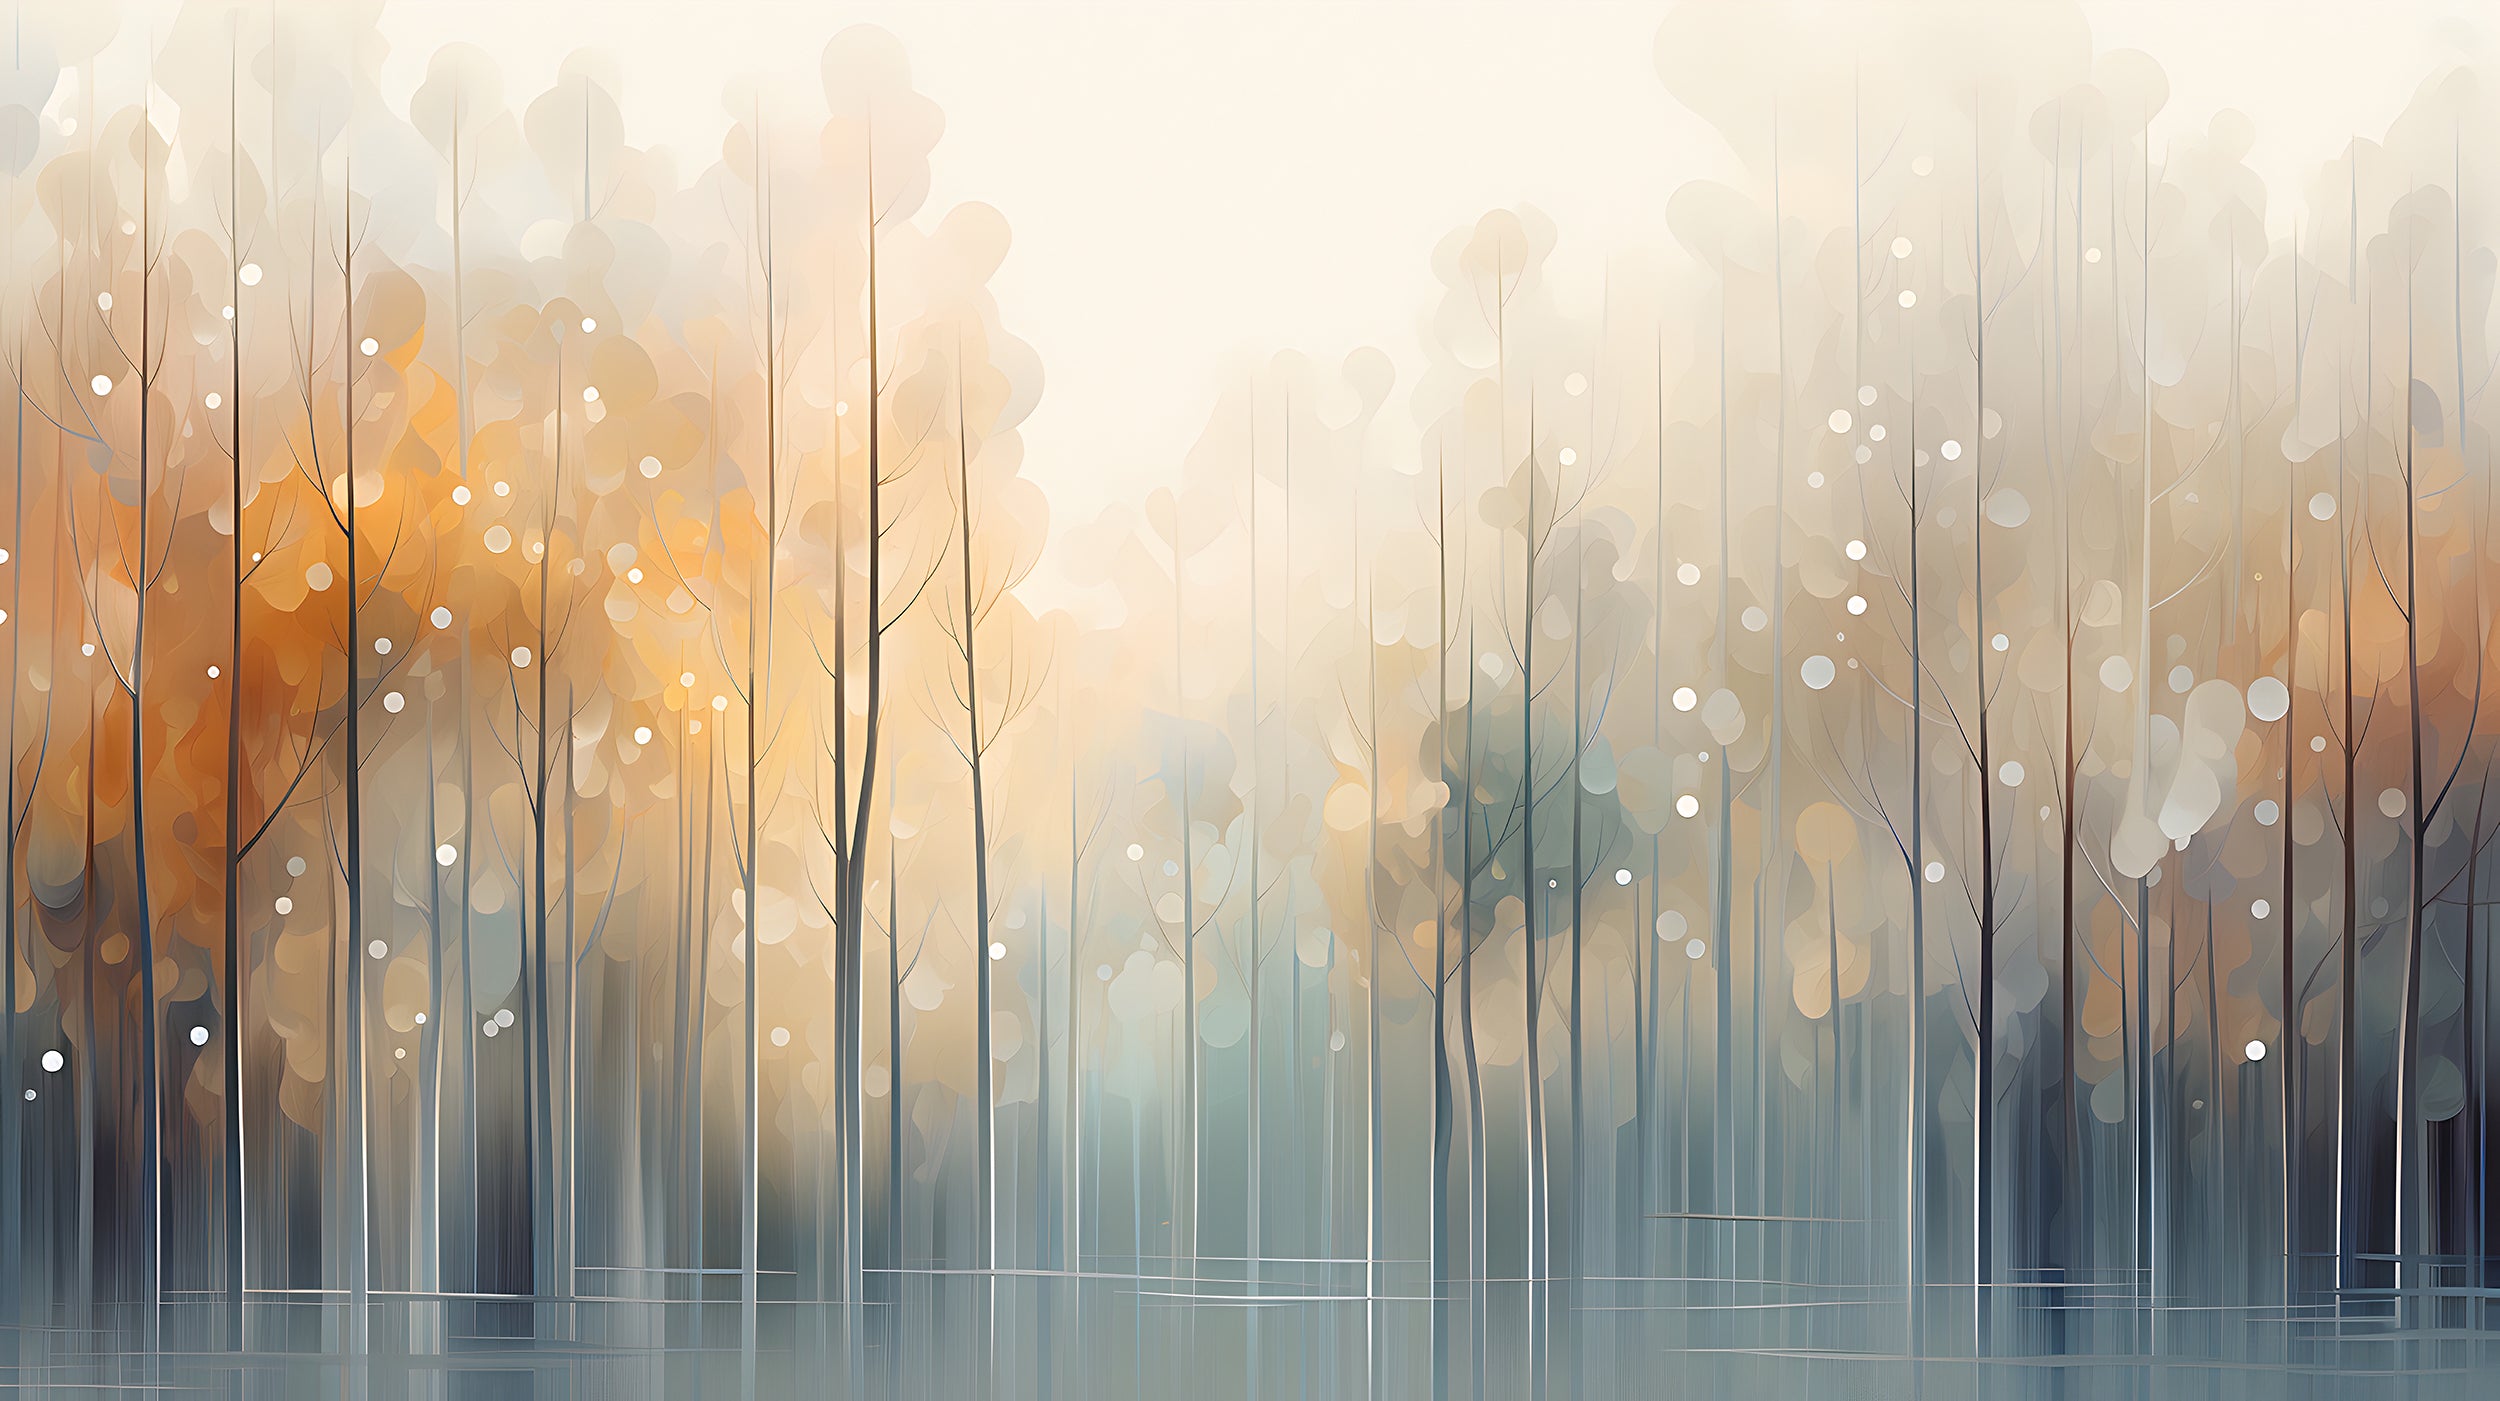 Misty Forest Wallpaper